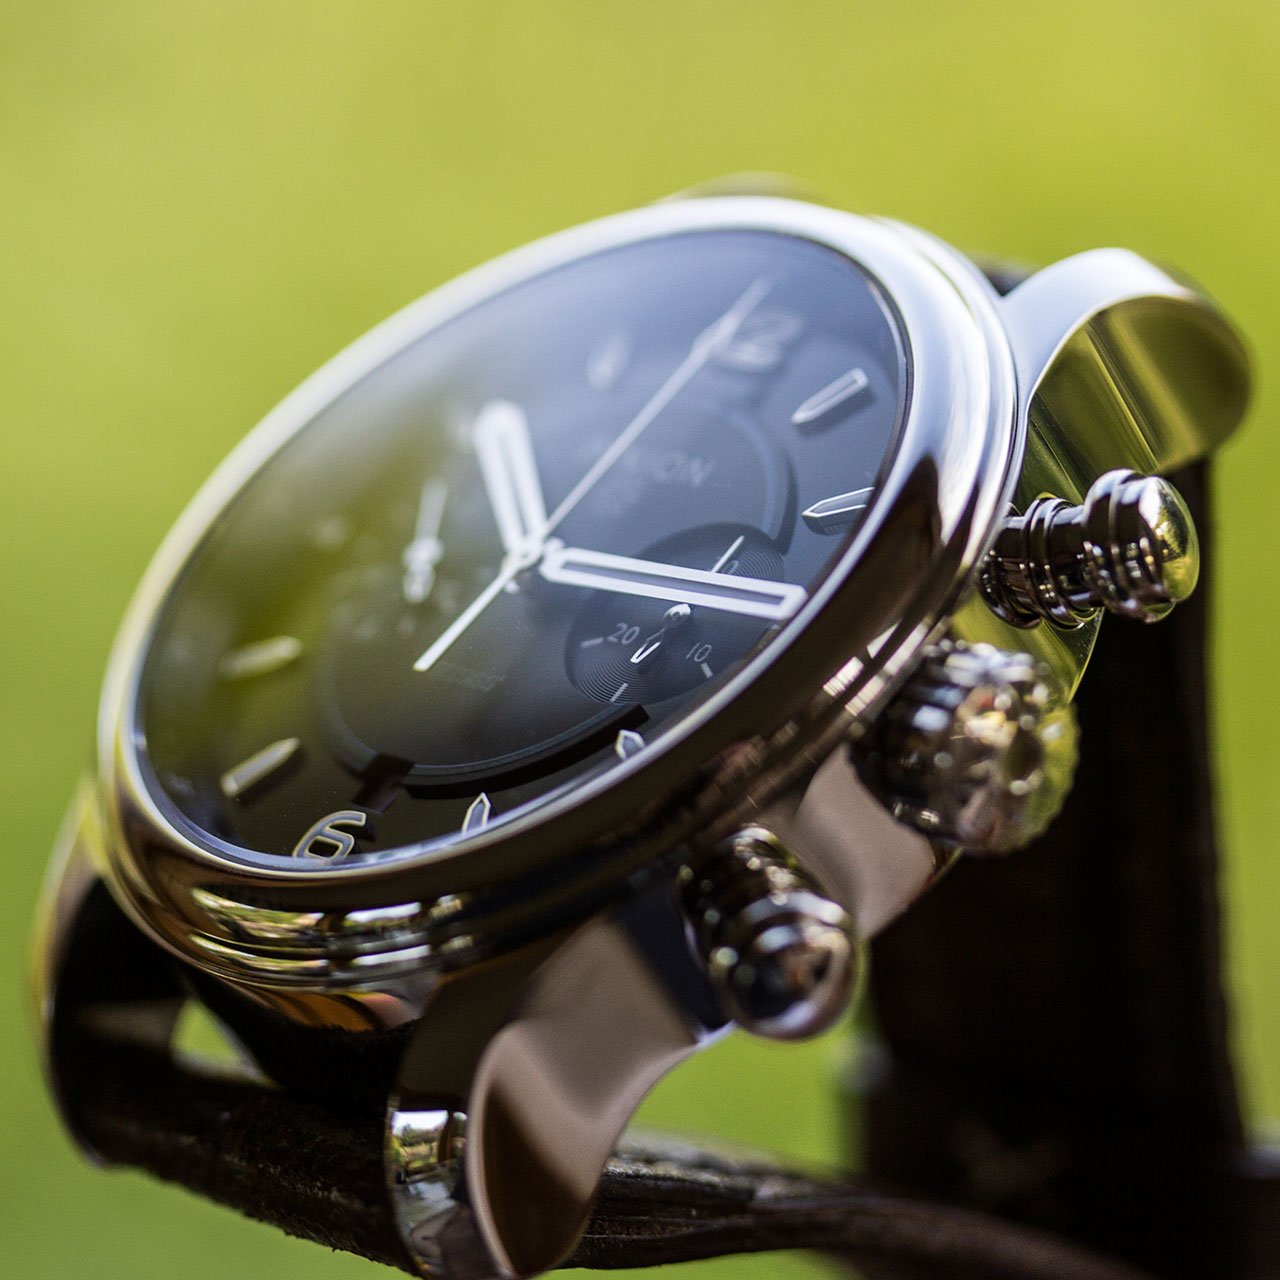 Pinion R-1969 limited edition chronograph watch